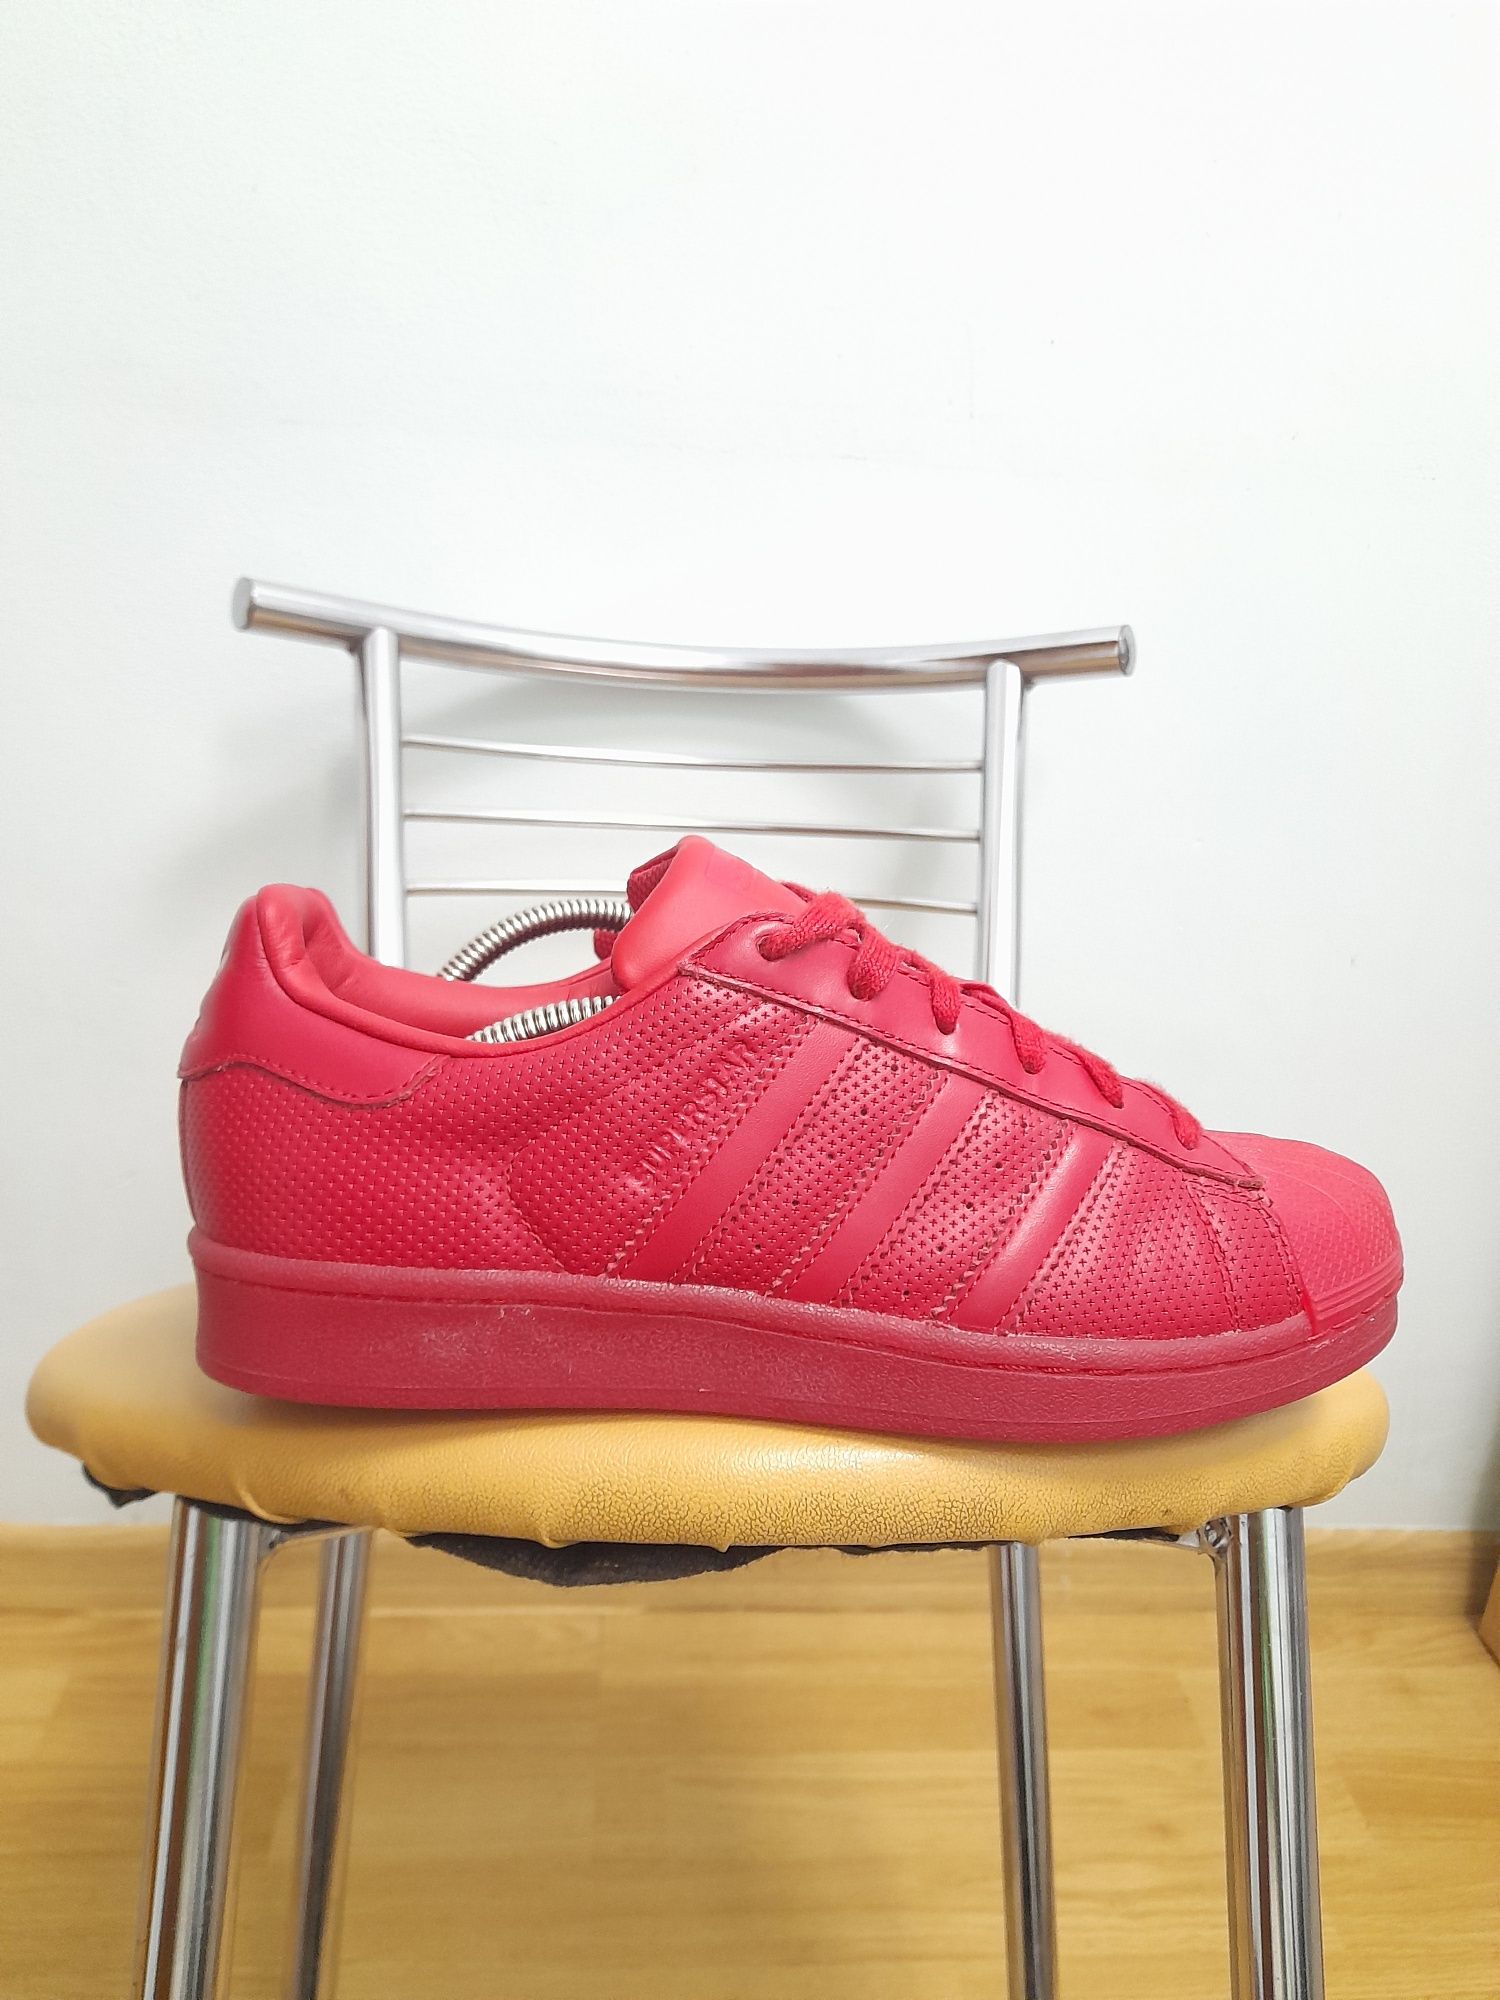 Кроссовки Adidas x Pharrell Superstar Supercolor "red" розмір 39 довж